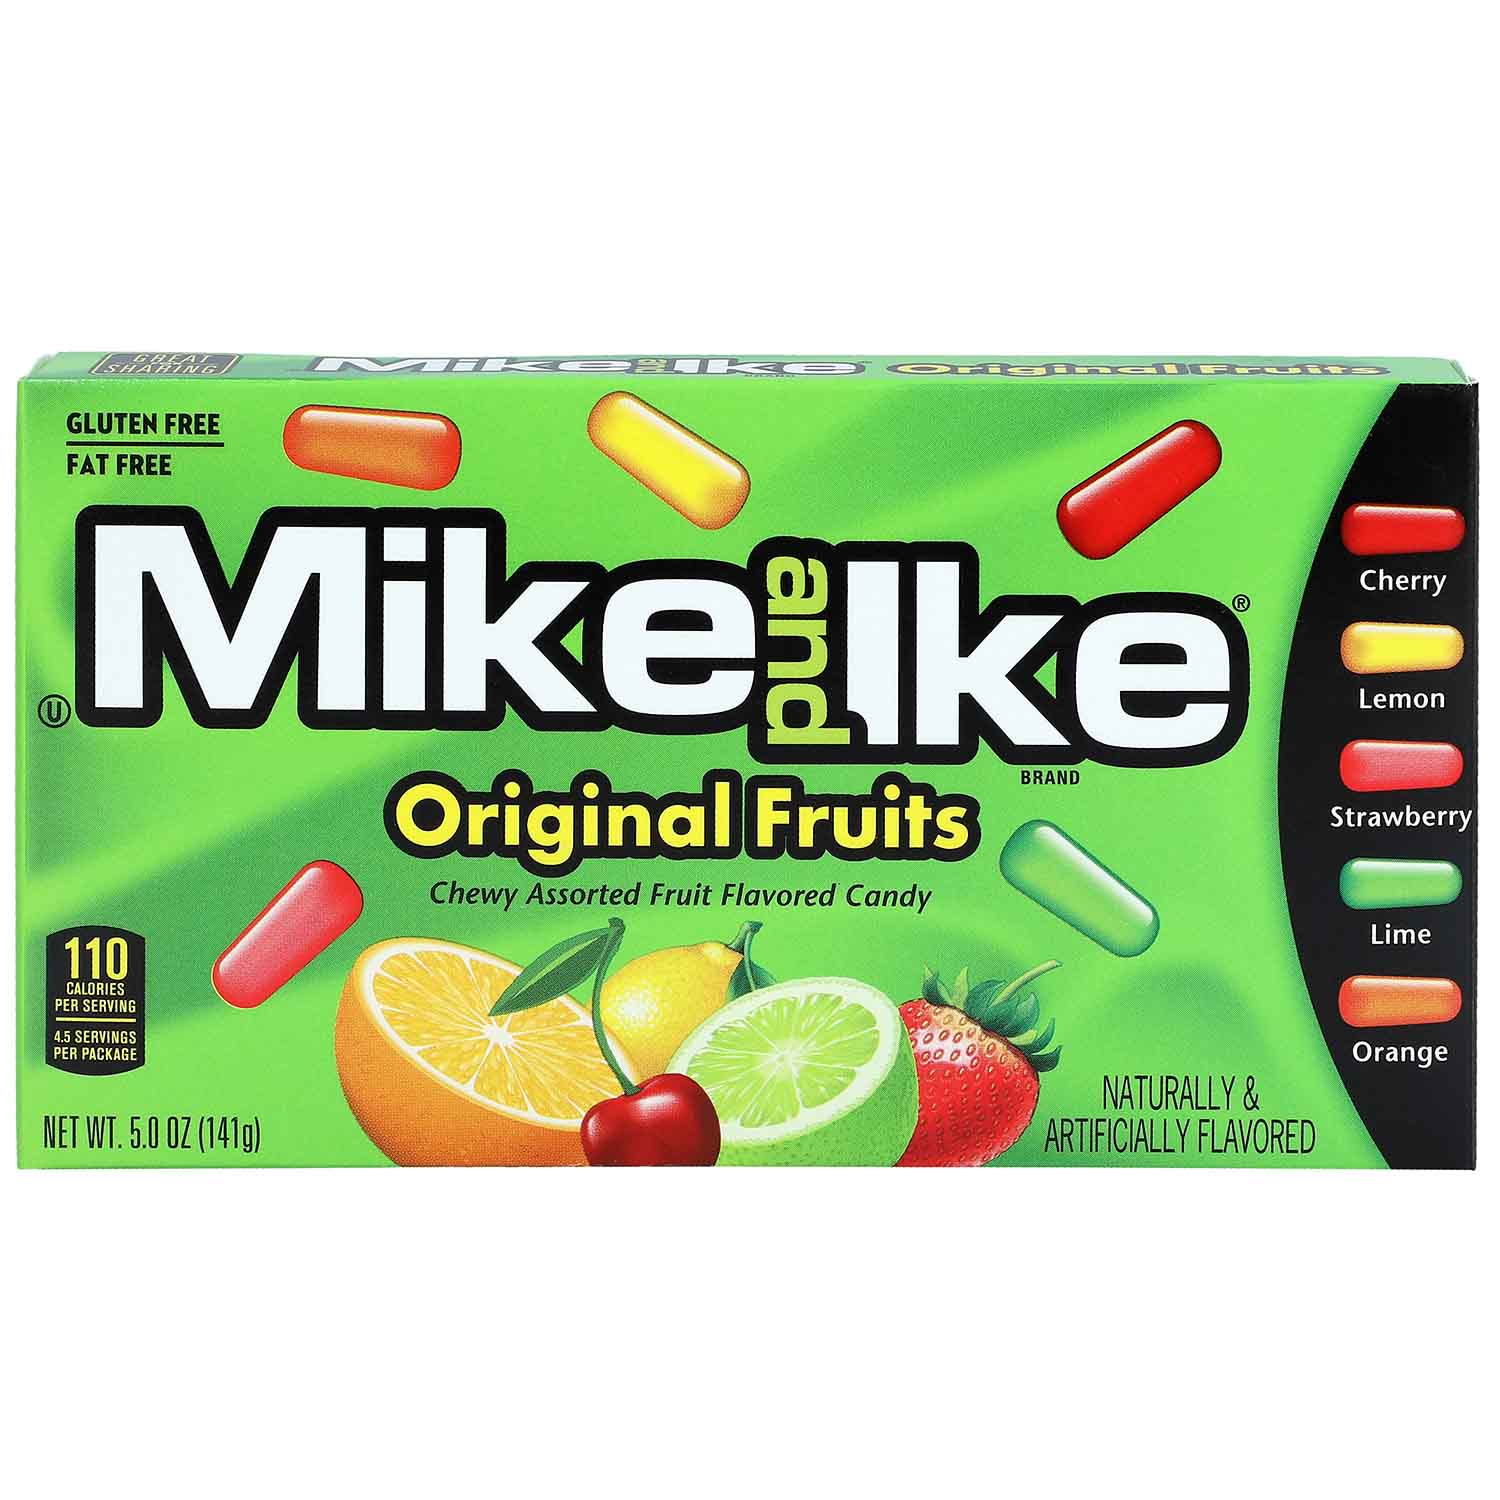 Mike and Ike Original Fruits (141g)